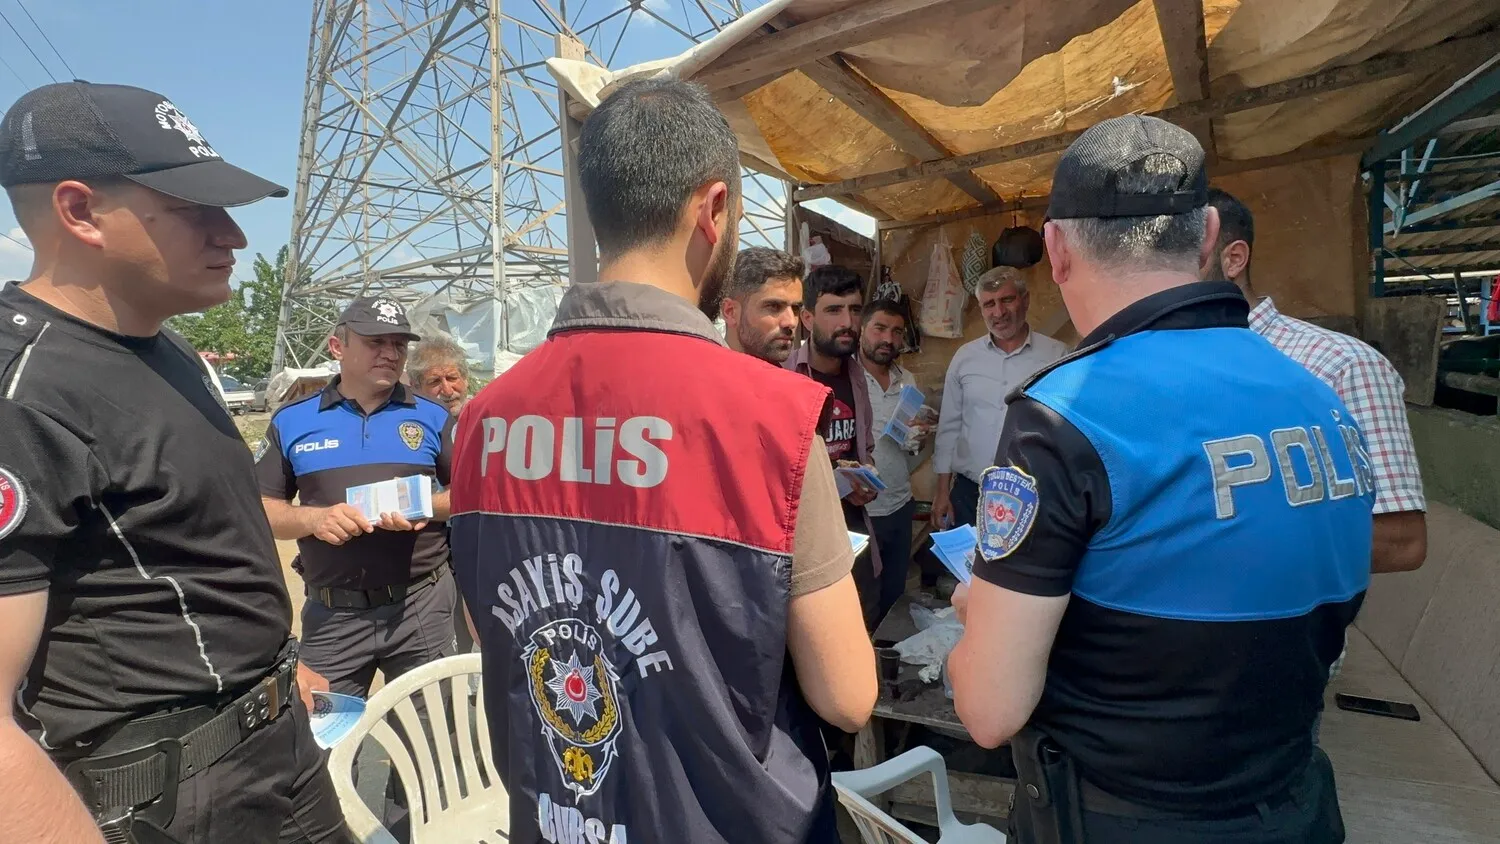 Genc Gazete Kurban Bursa Kurban Polis Uyari (3) 3 11Zon